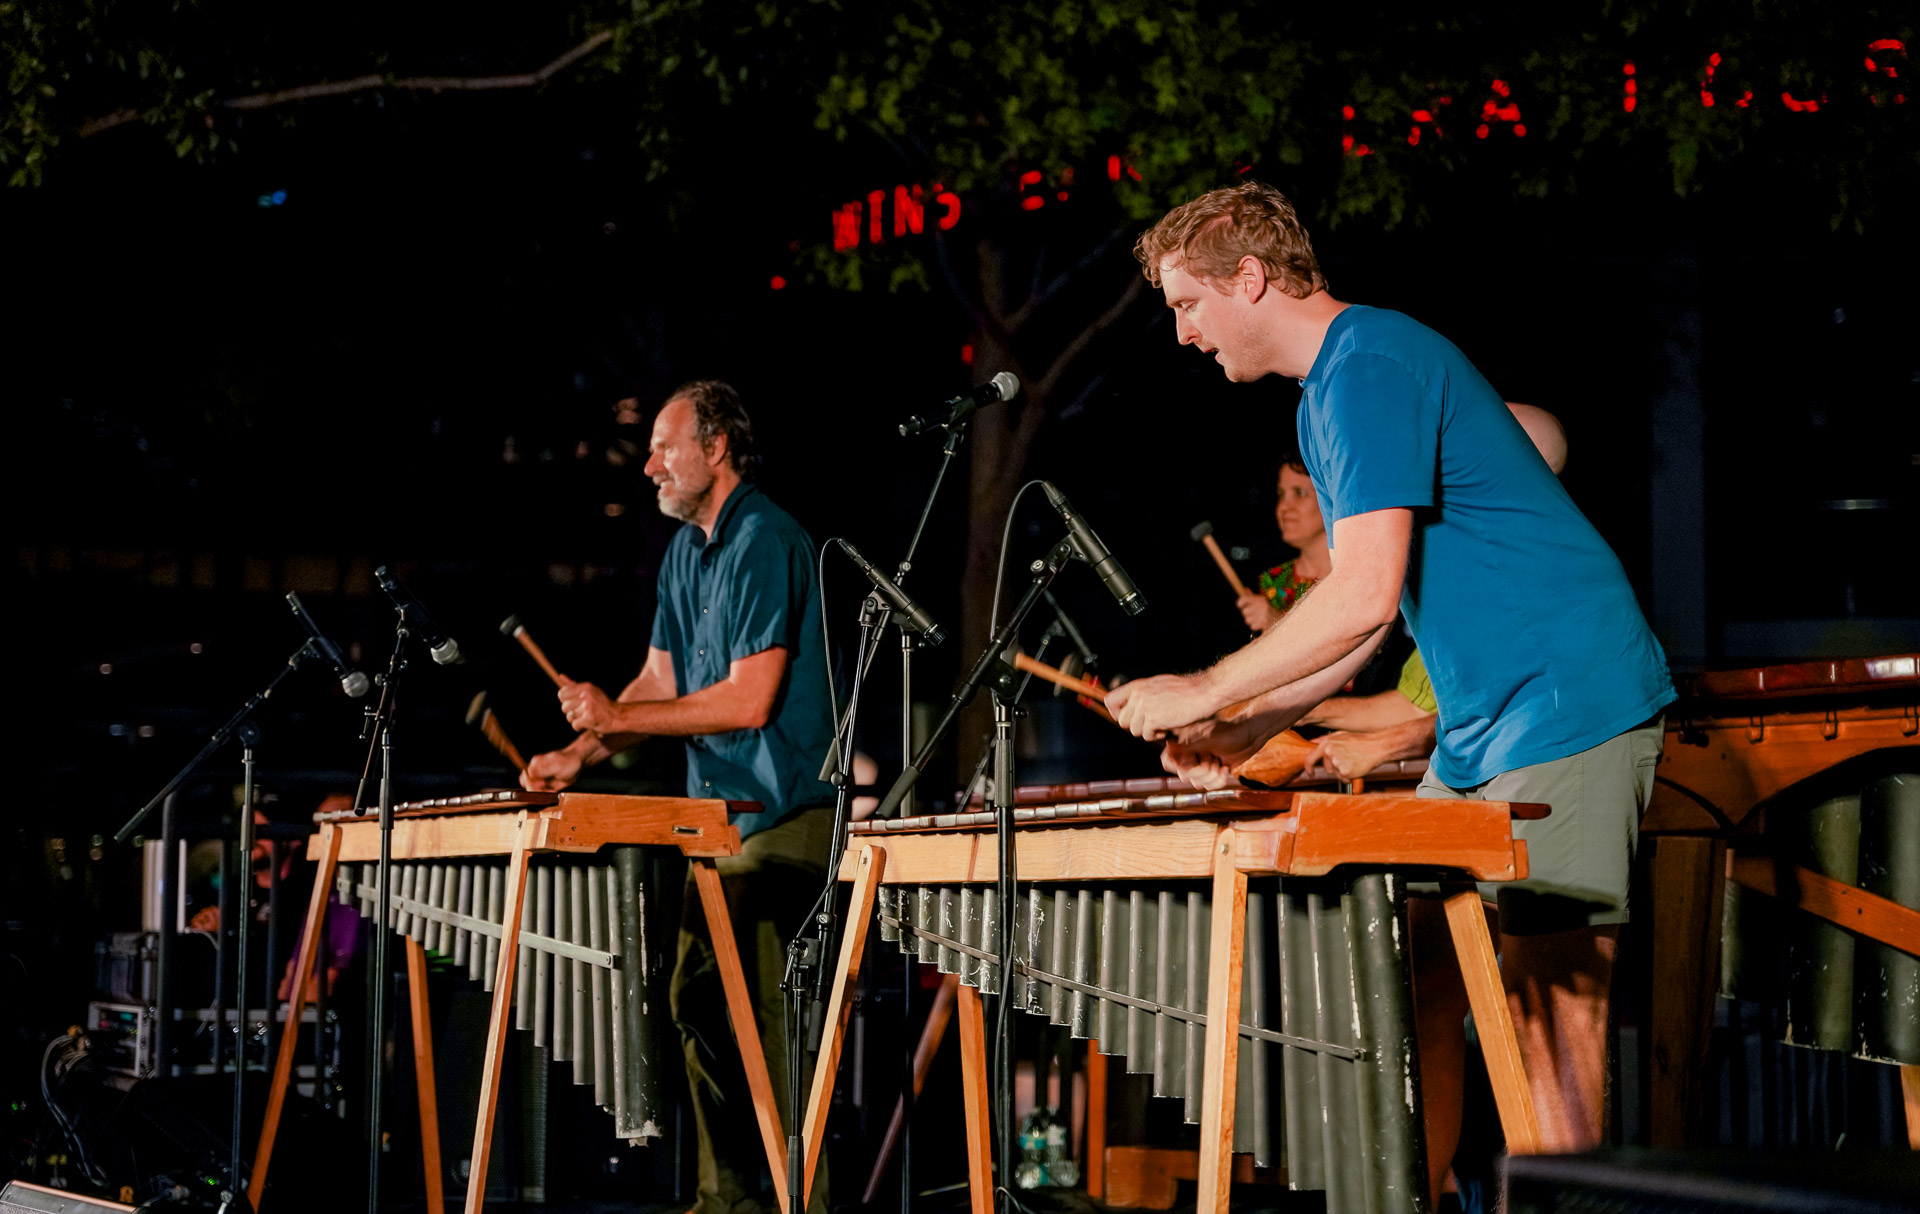 People playing marimbas